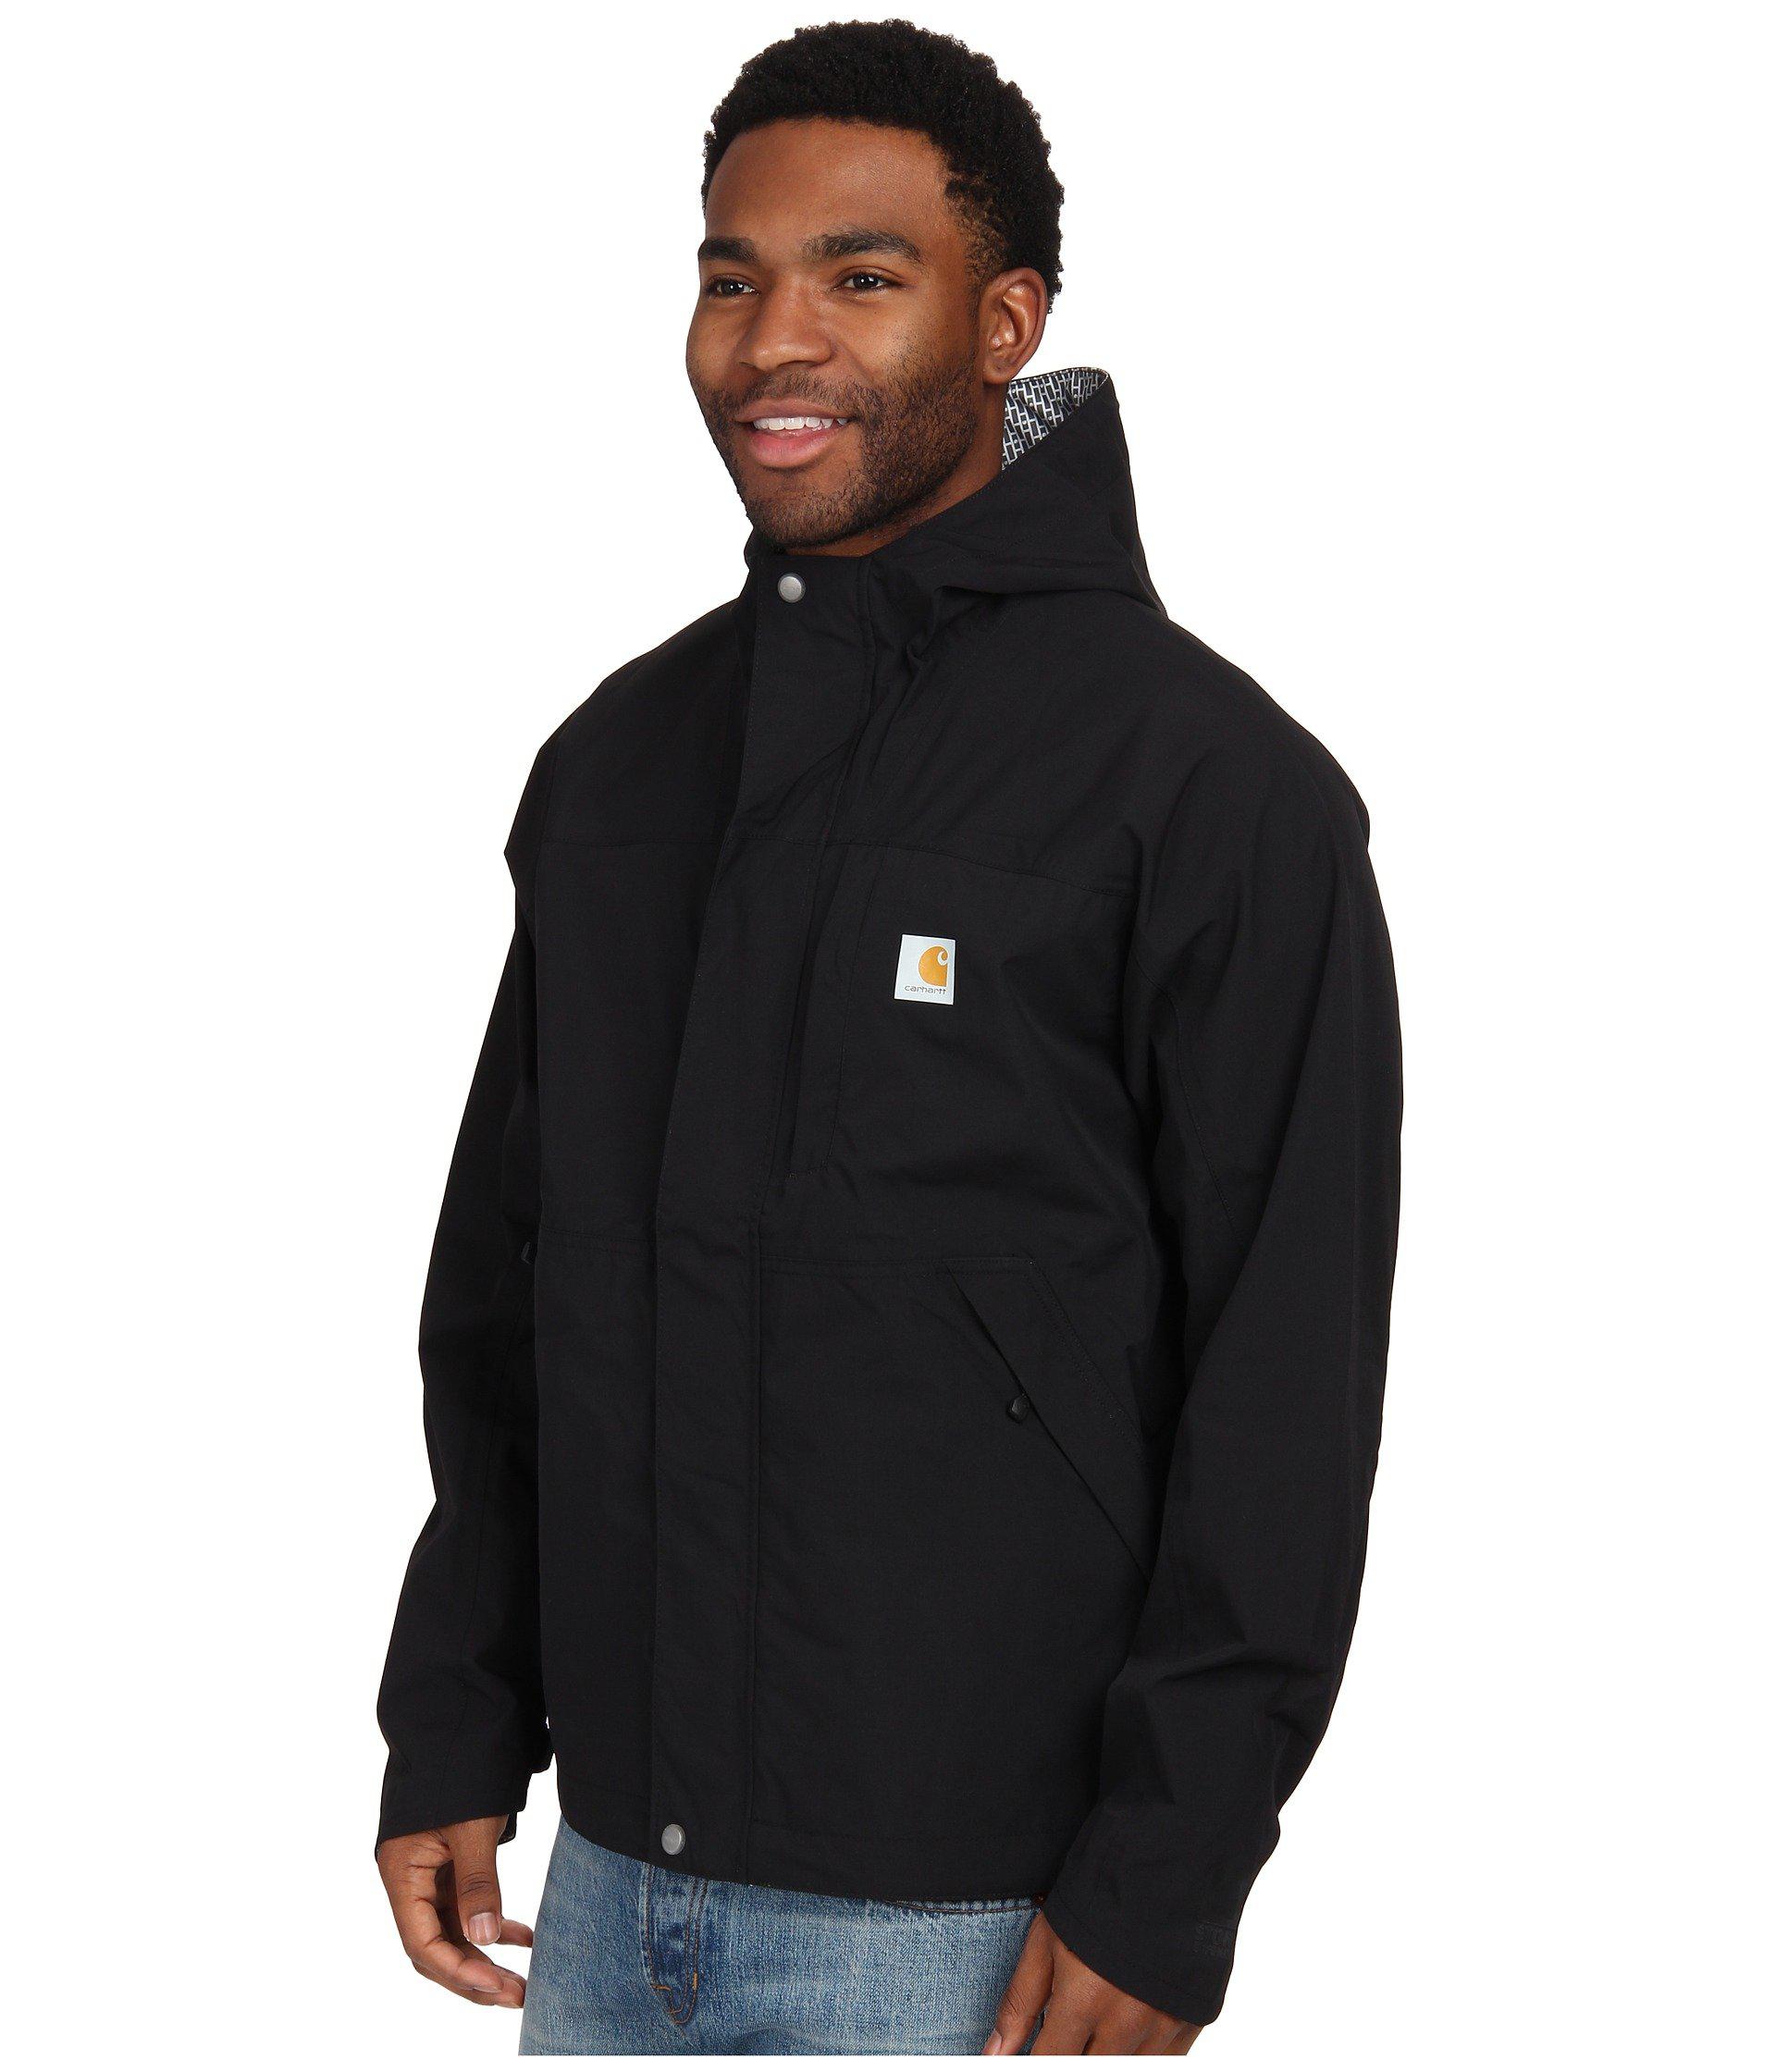 Carhartt Shoreline Vapor Jacket in Black for Men - Lyst